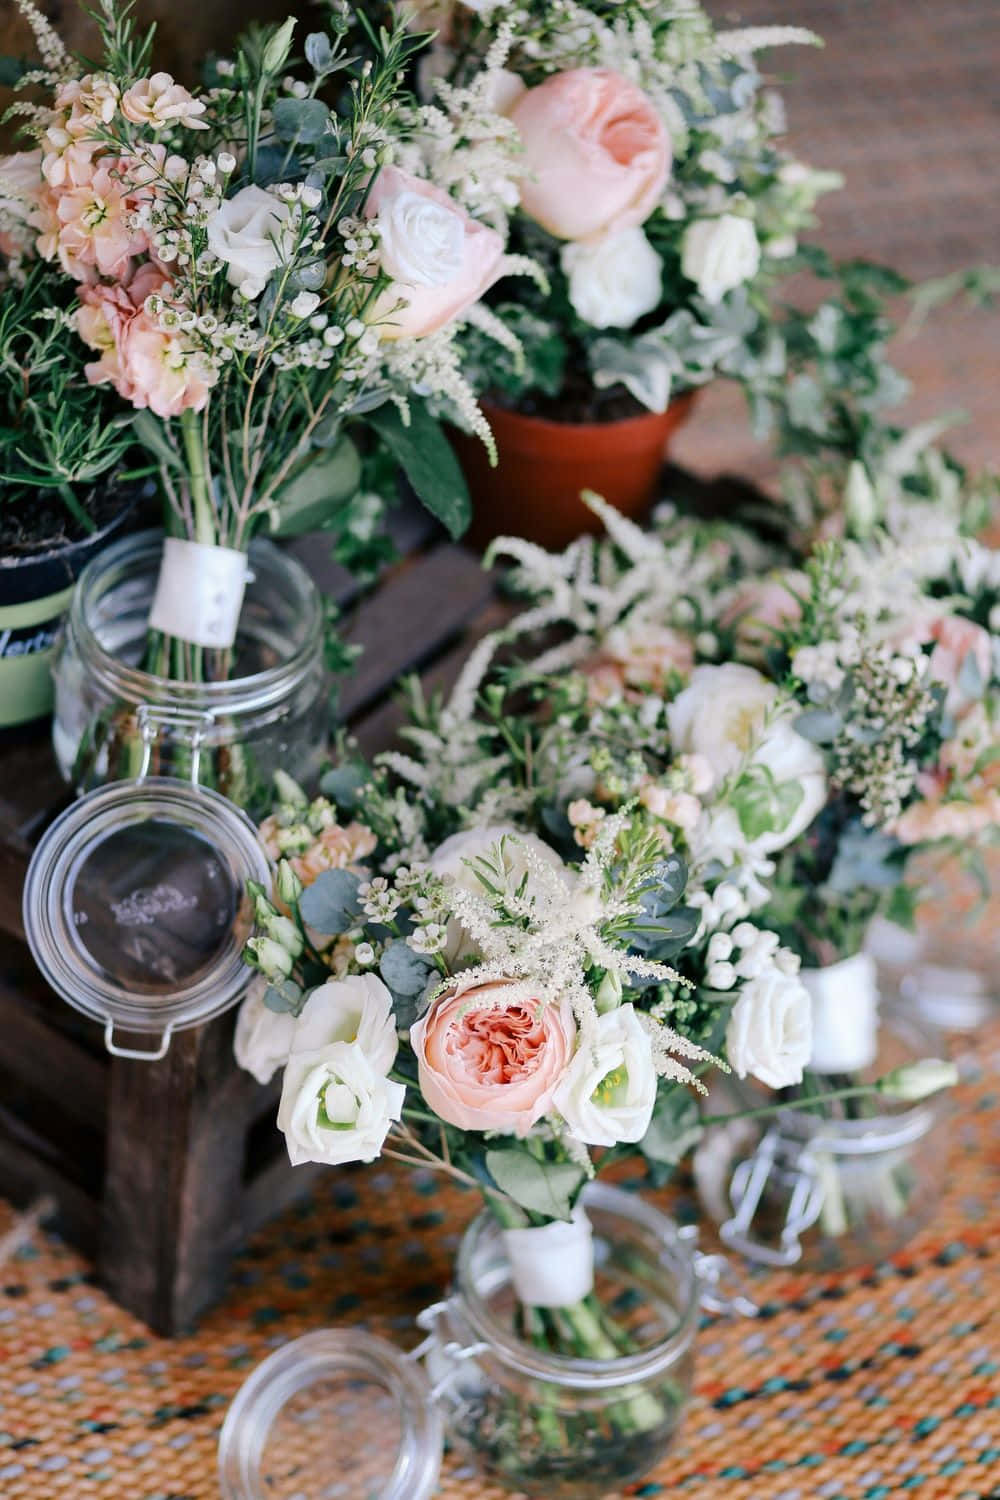 Elegant Wedding Flower Arrangement Wallpaper